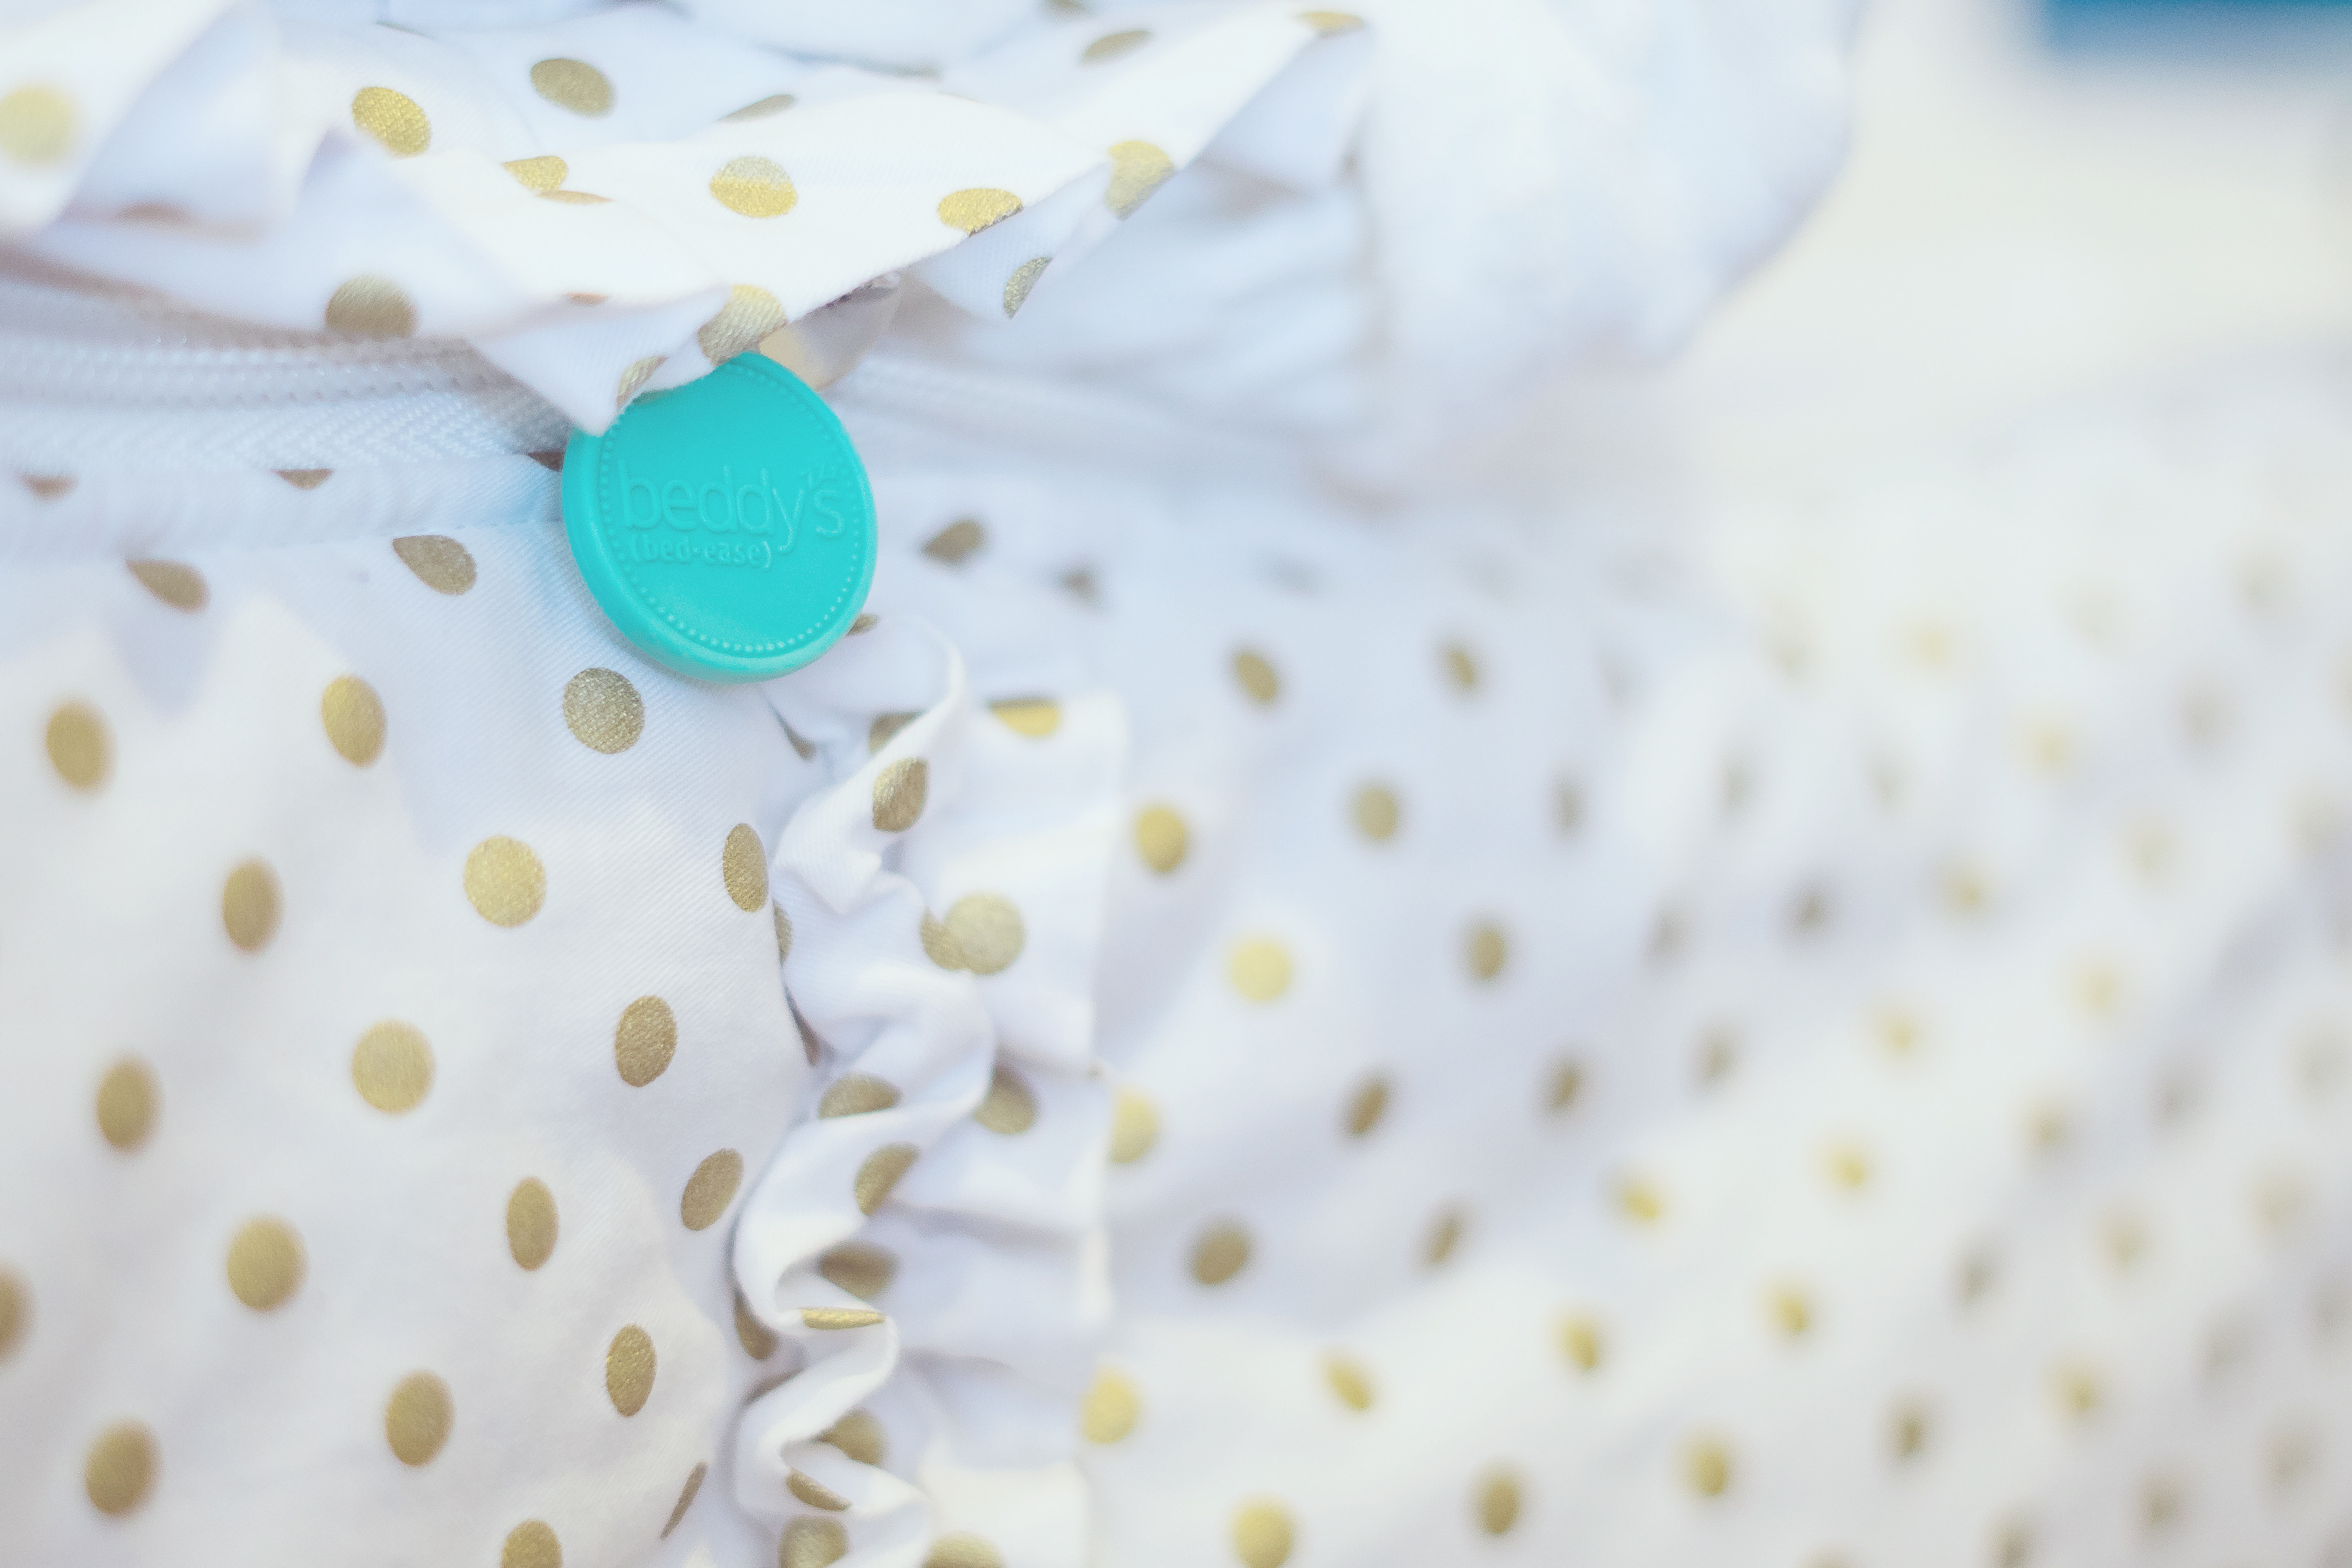 Little Girls Bedroom Ideas | Fun room makeover using Beddy's zipper bedding! 